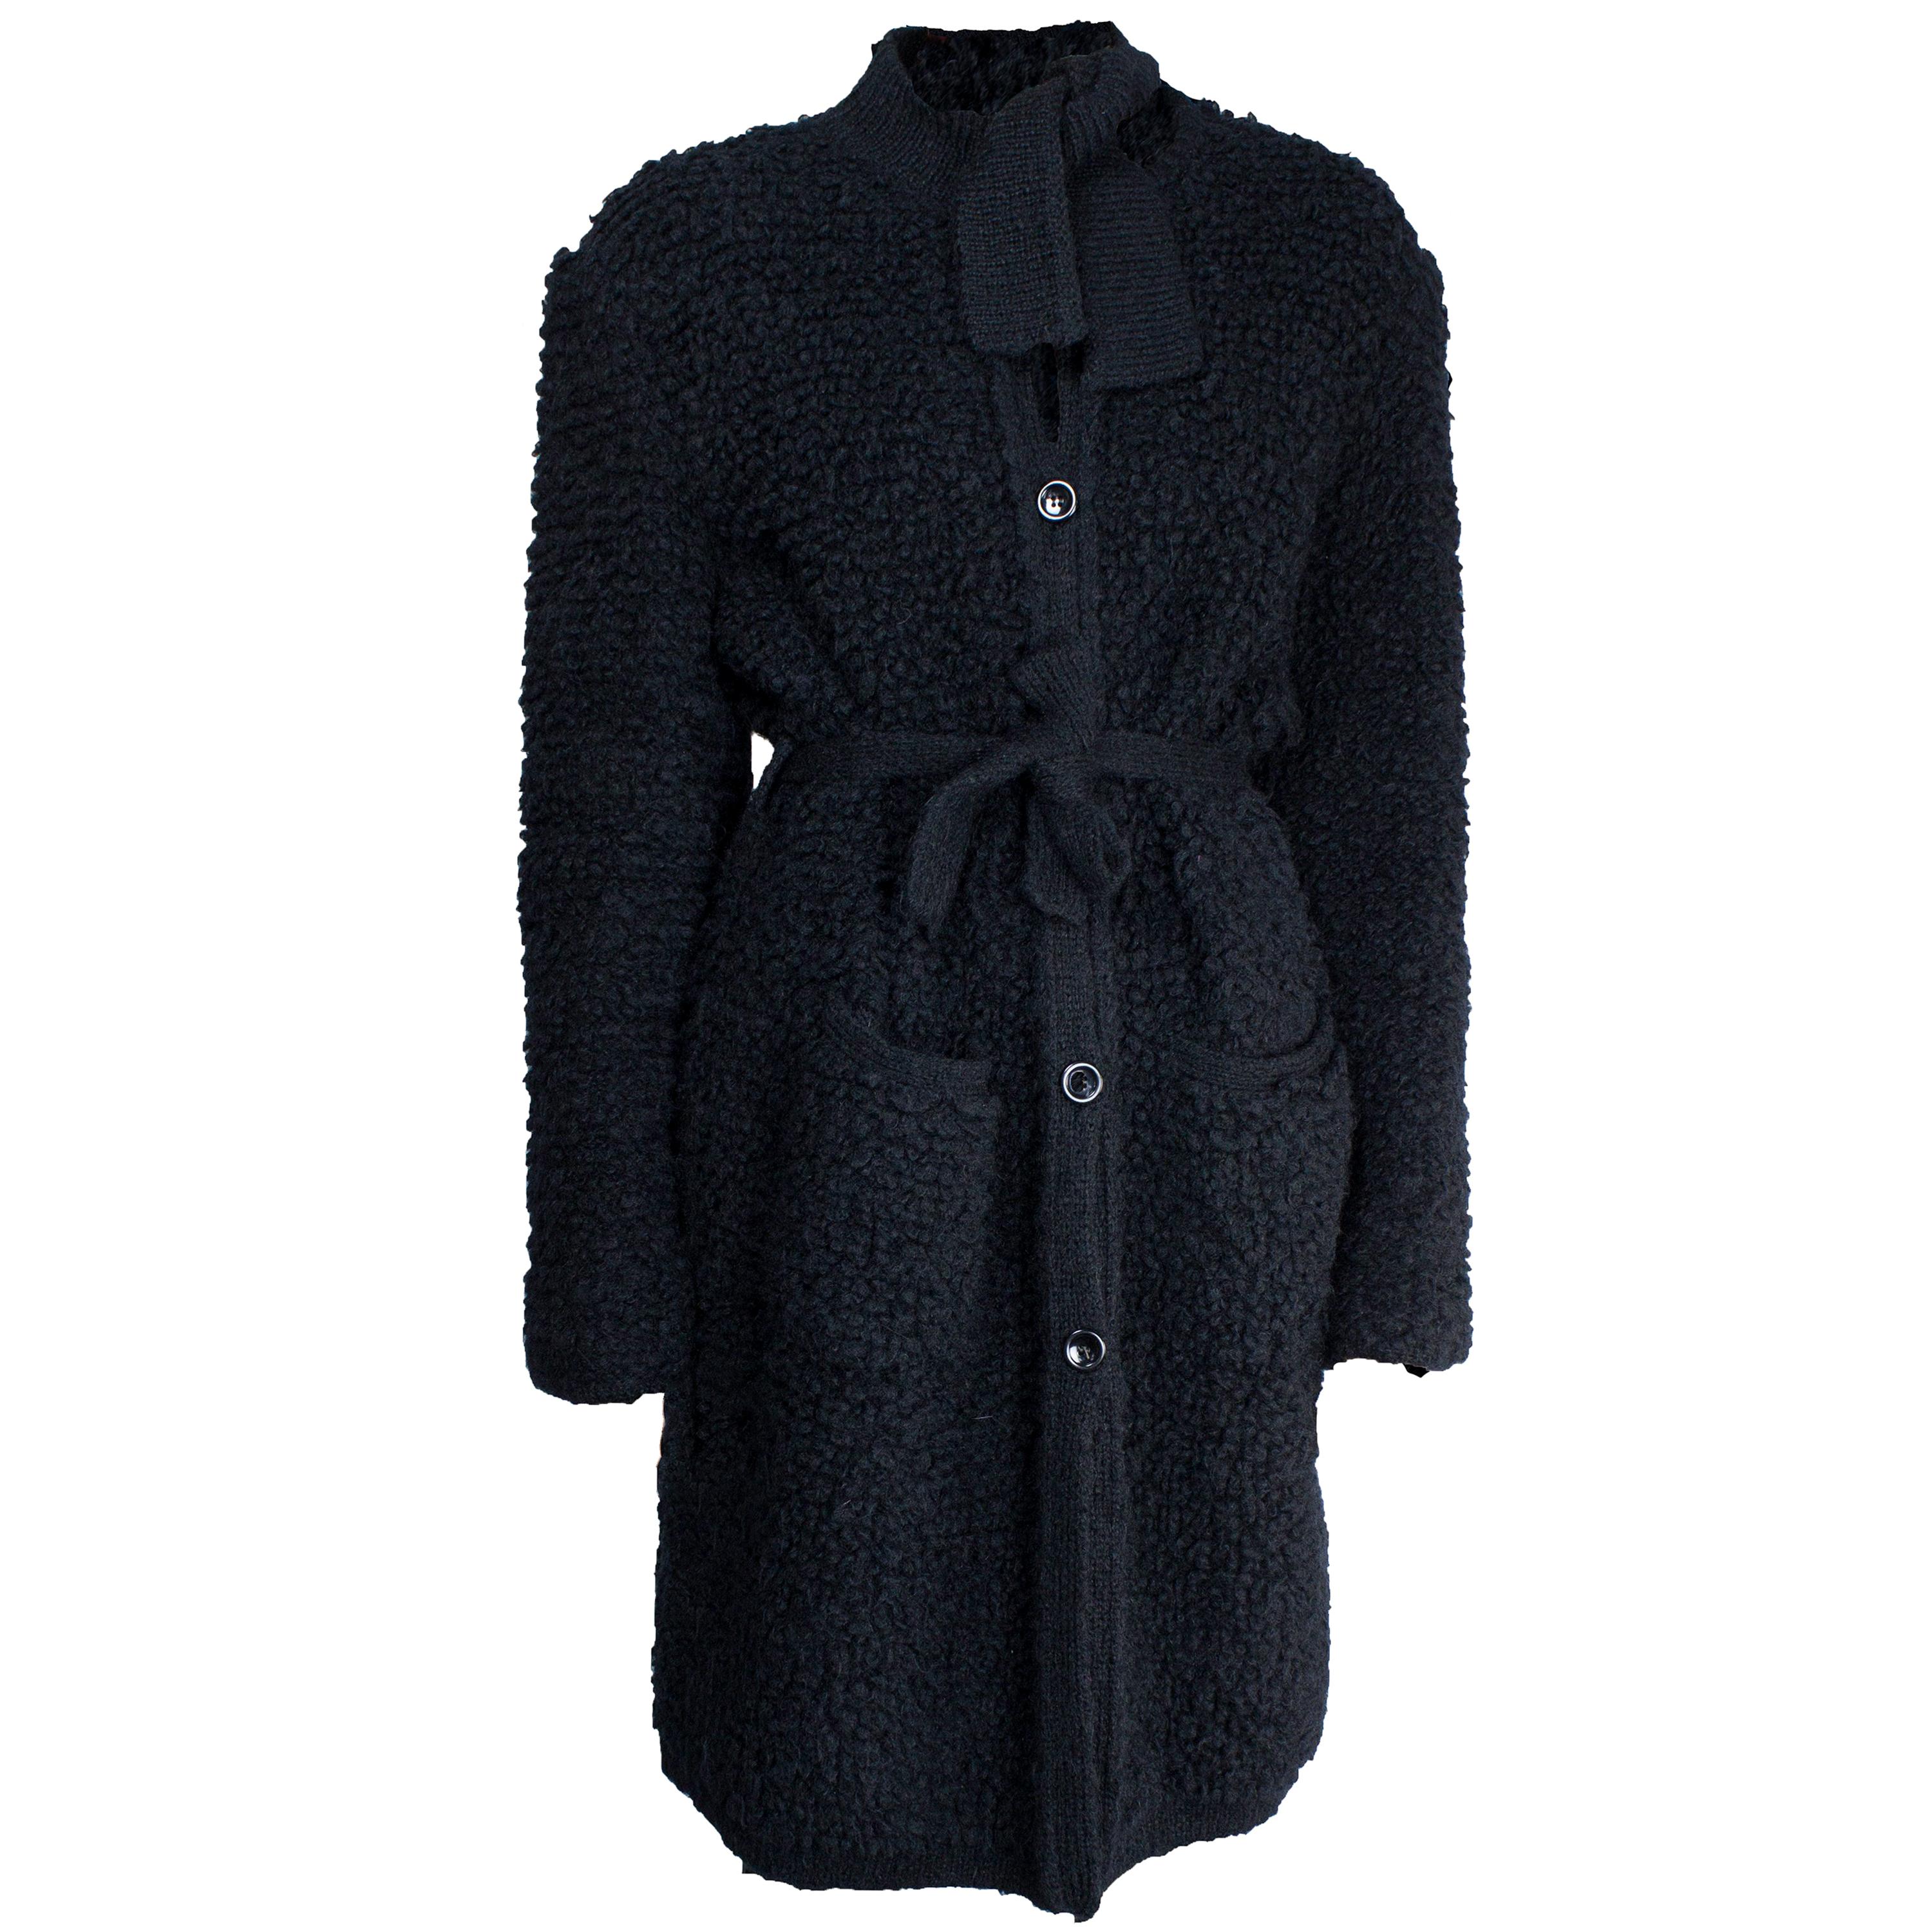 Important Sonia Rykiel knitted black wool coat, circa 1960s